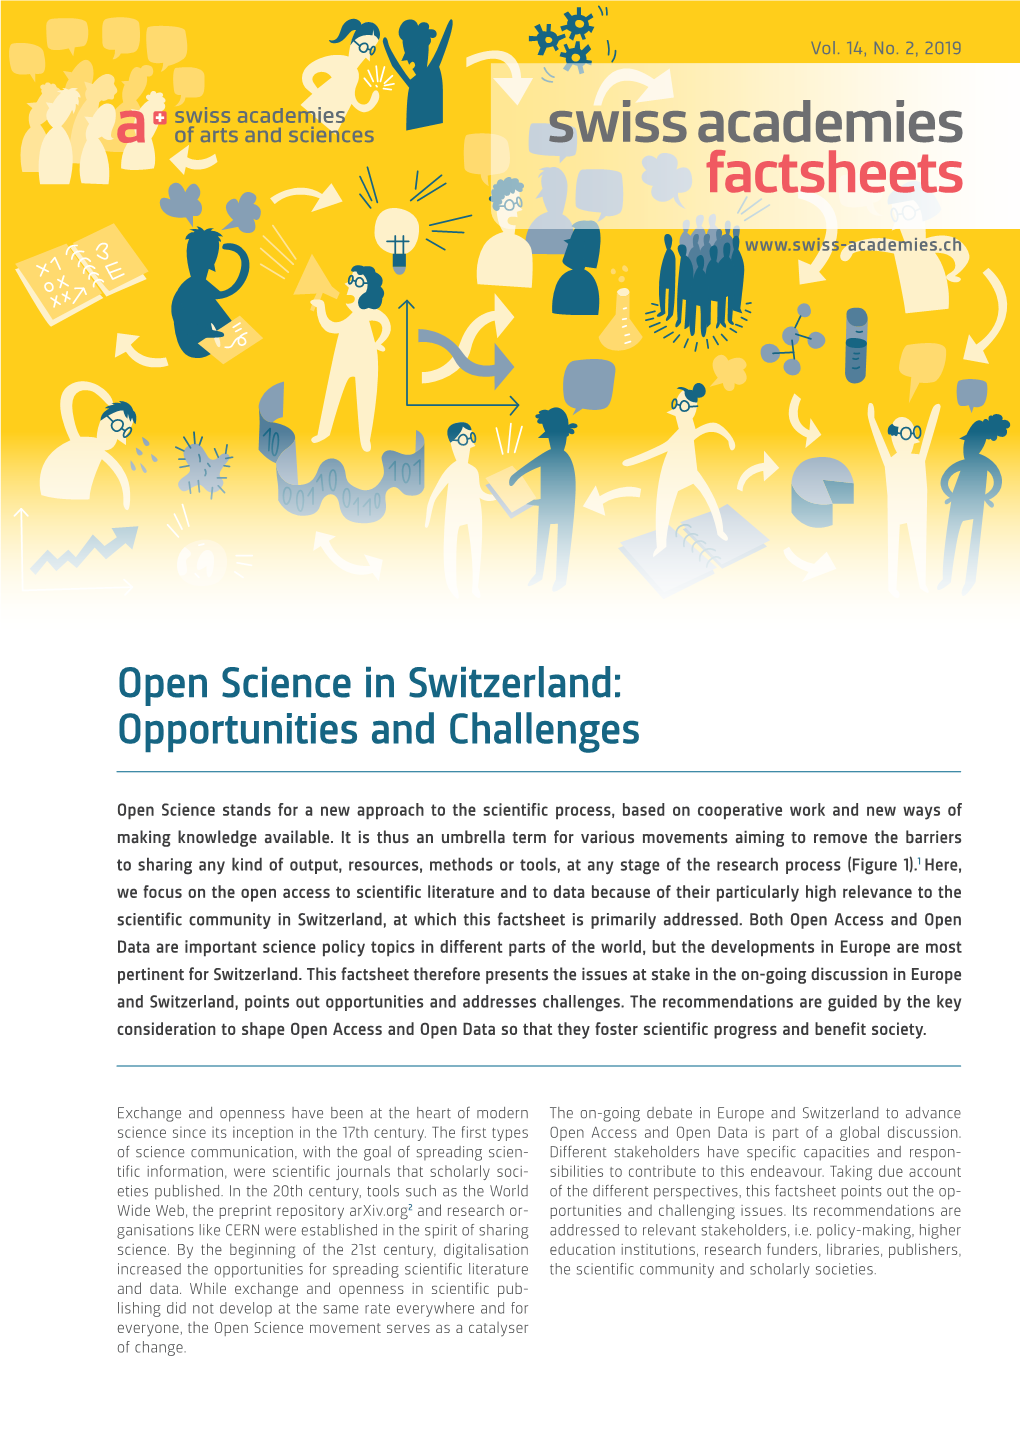 Open Science in Switzerland: Opportunities and Challenges